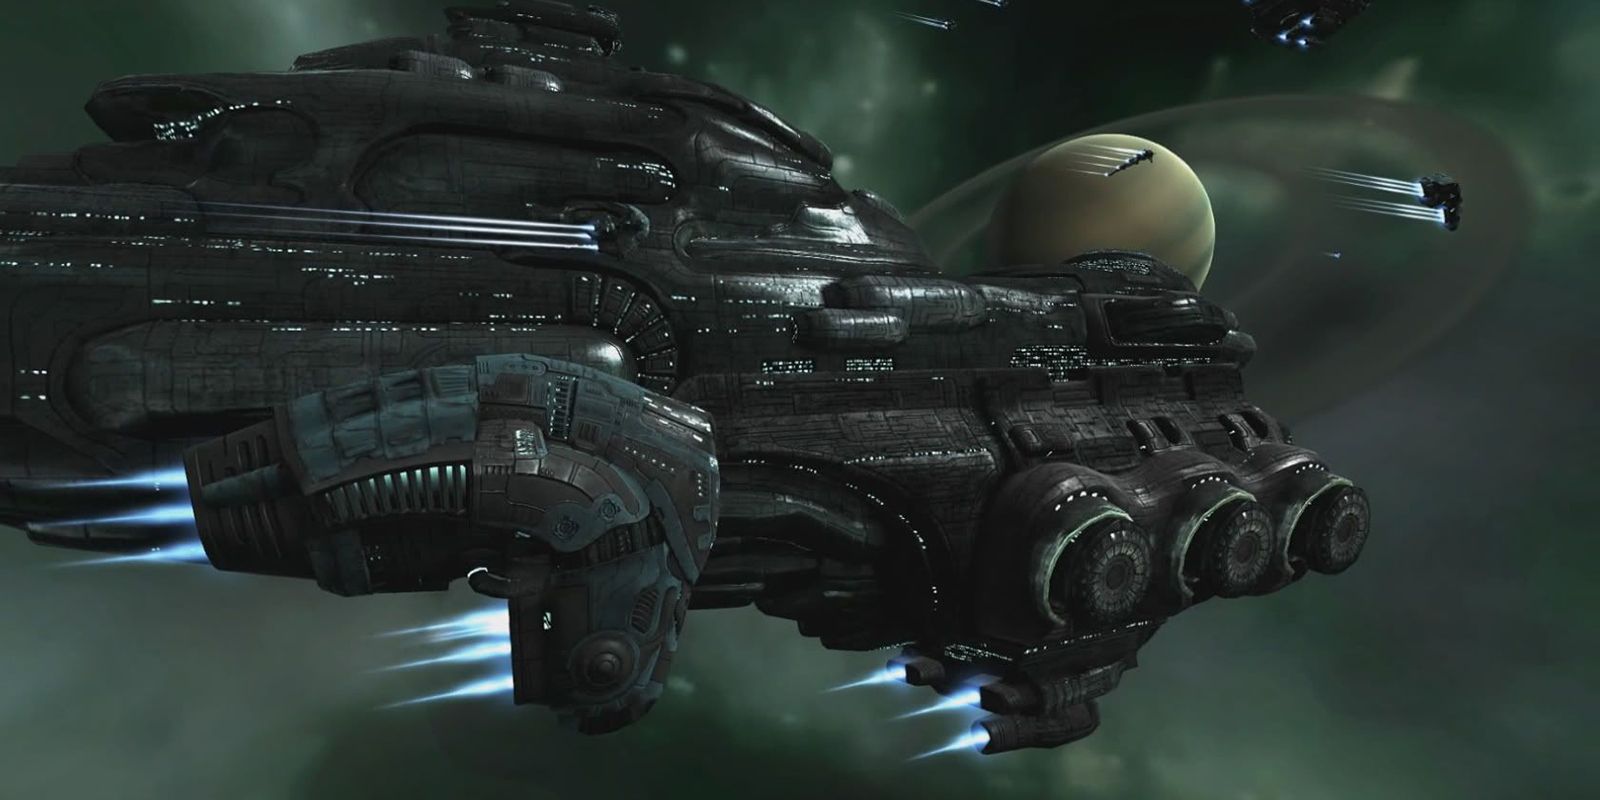 Eve Online Gallente Fleet large ship in space